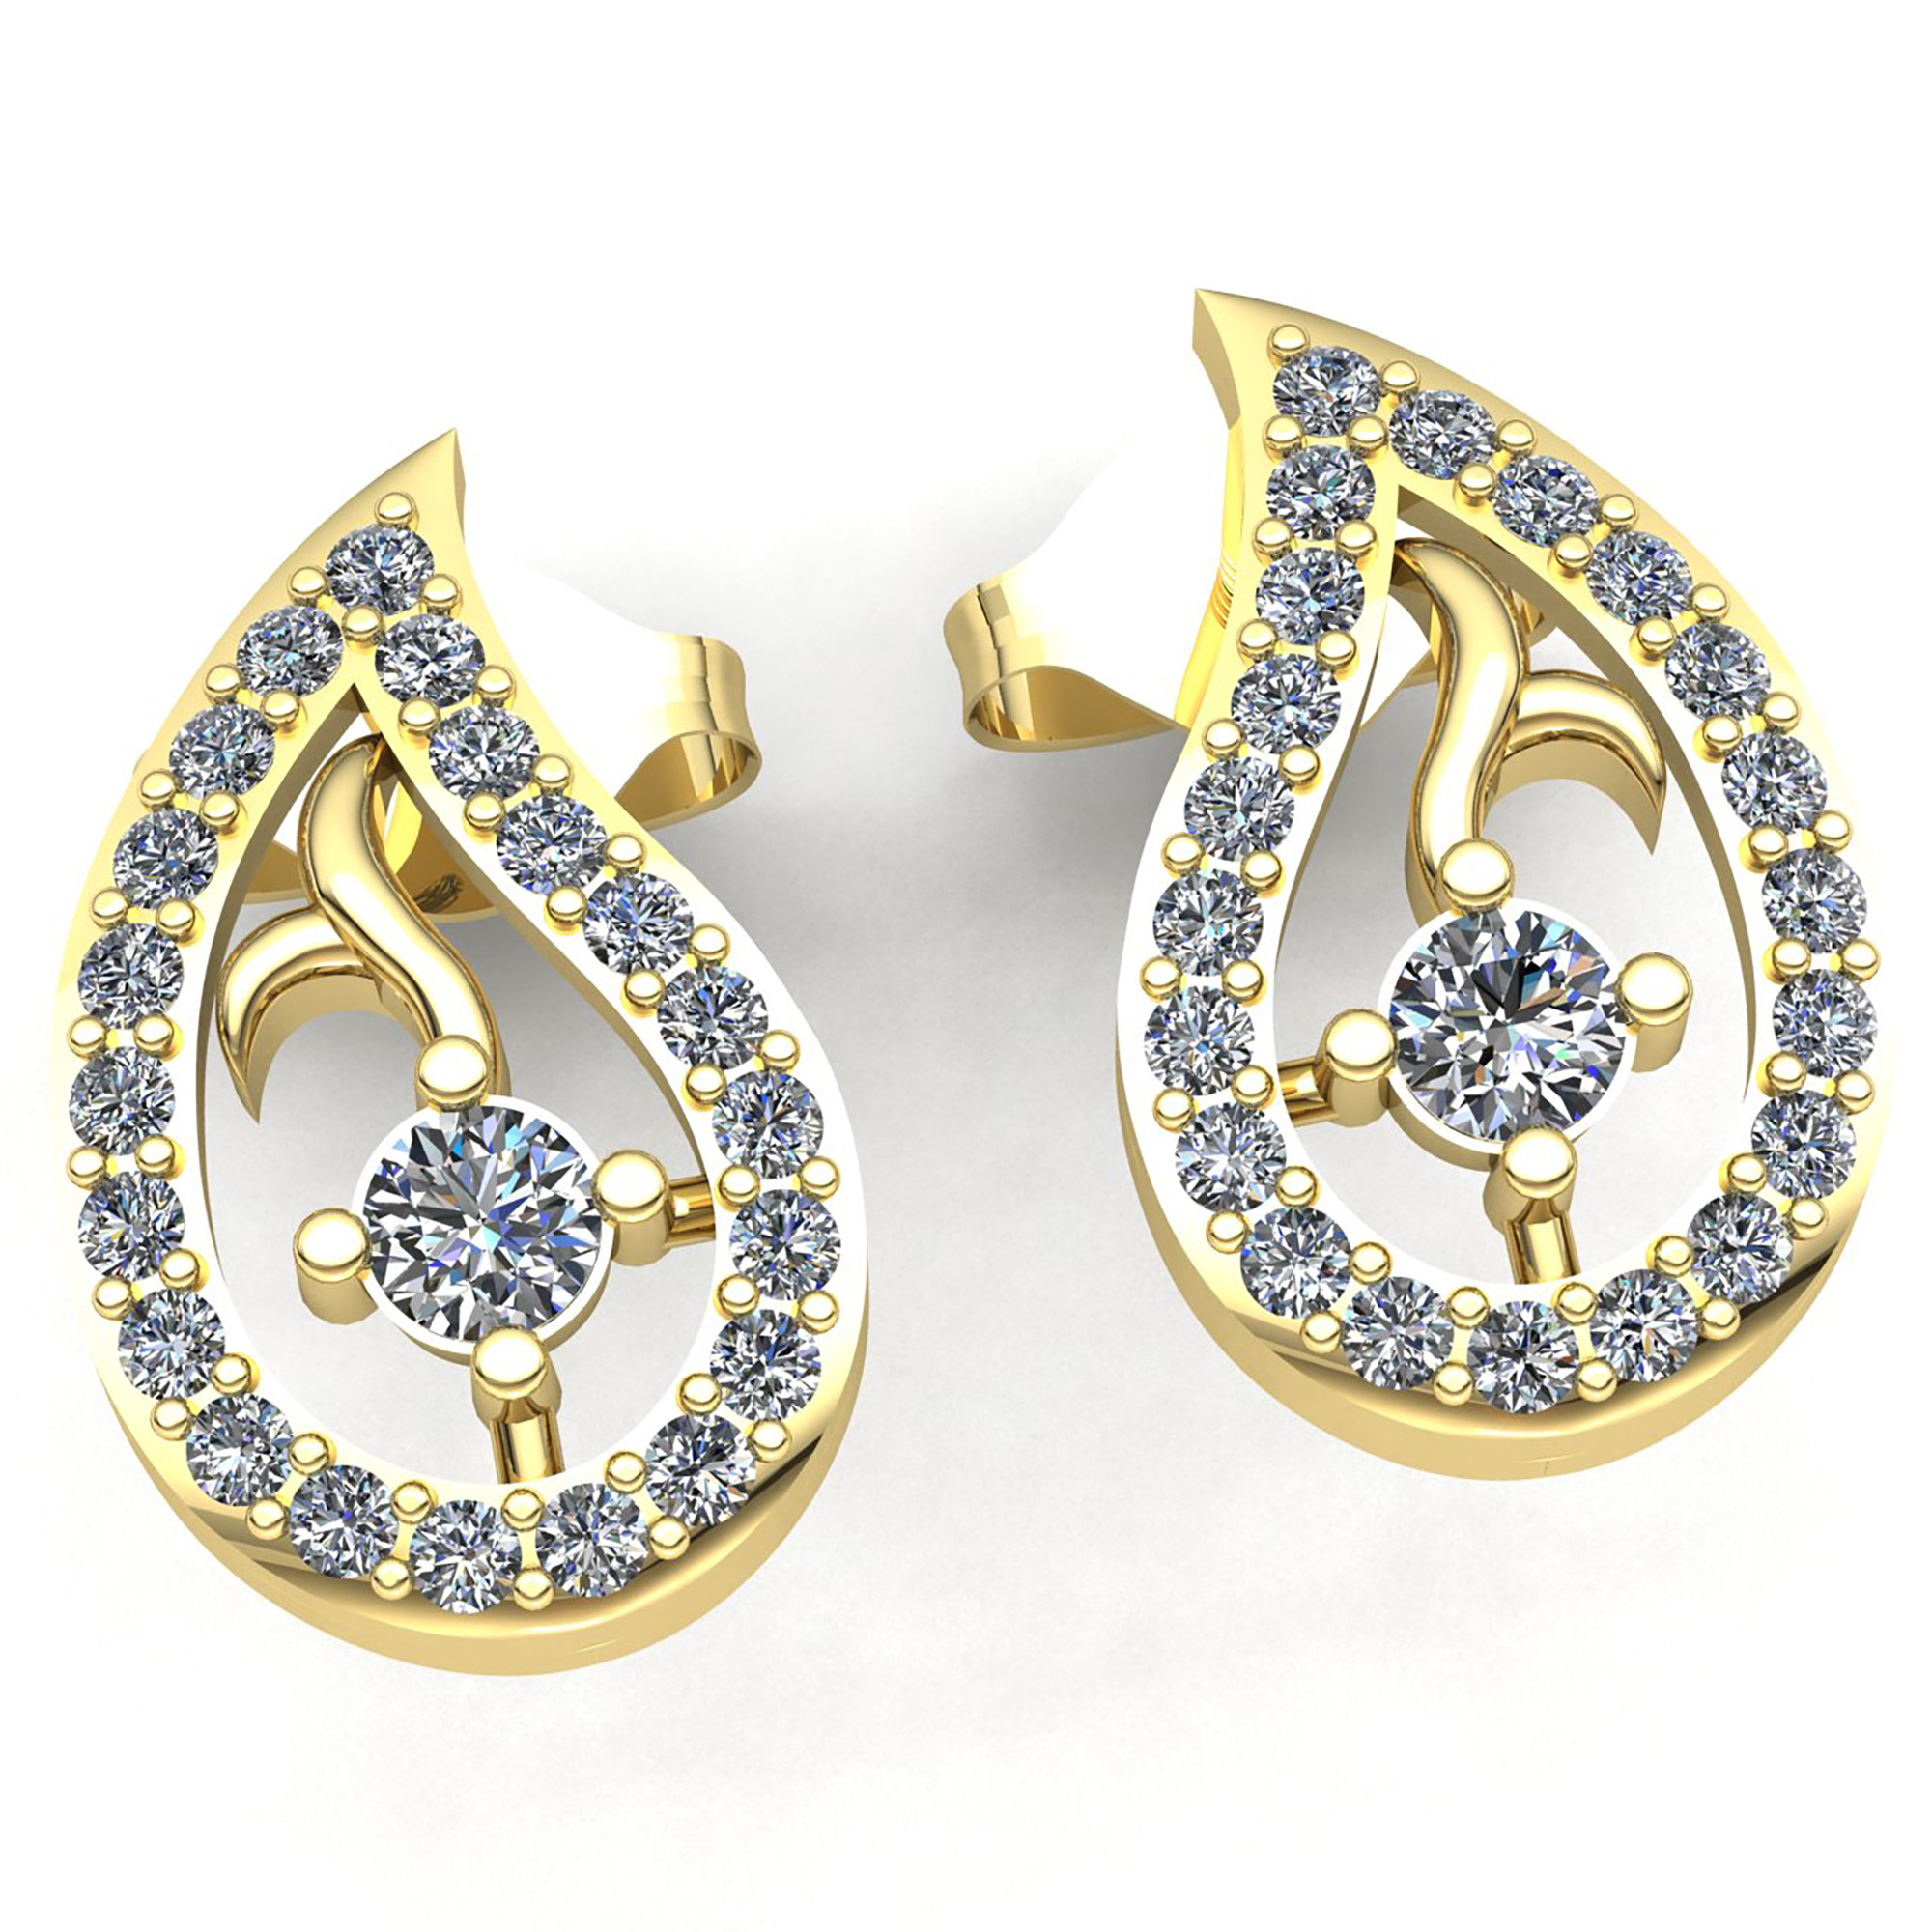 Jewel We Sell Genuine 1.50carat Round Cut Diamond Ladies Fancy Stud Earrings 14K White, Yellow or Rose Gold IJ SI2